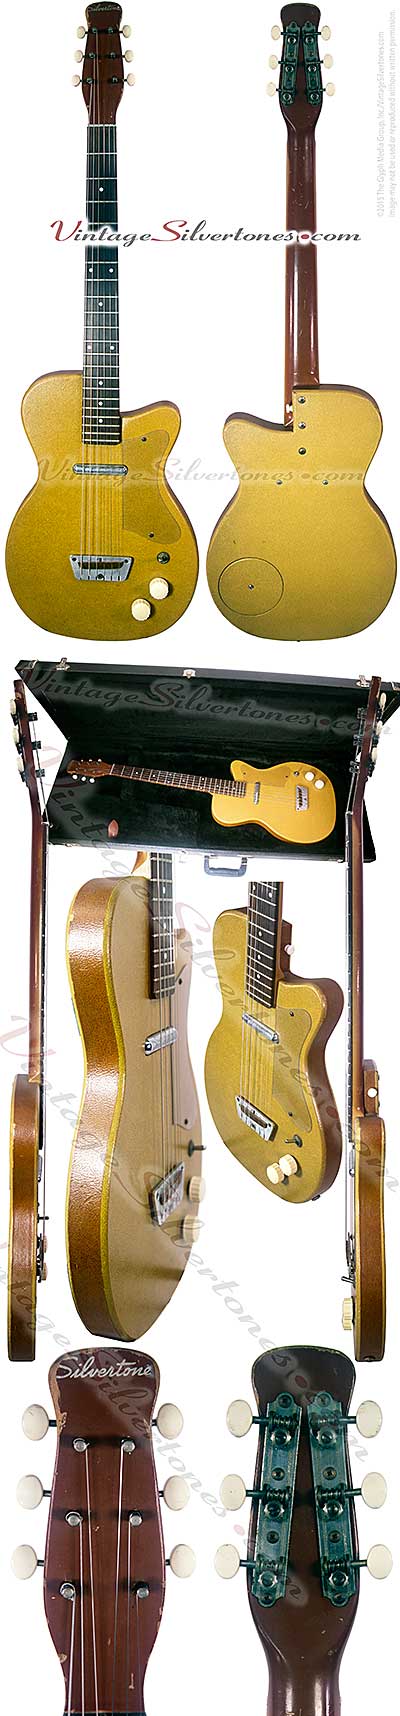 Silvertone 1357 made by Danelectro U1, one pickup, electric guitar, semi-hollow body, ginger vinyl finish, tan vinyl binding, masonite body, lipstick pickup, made in 1956